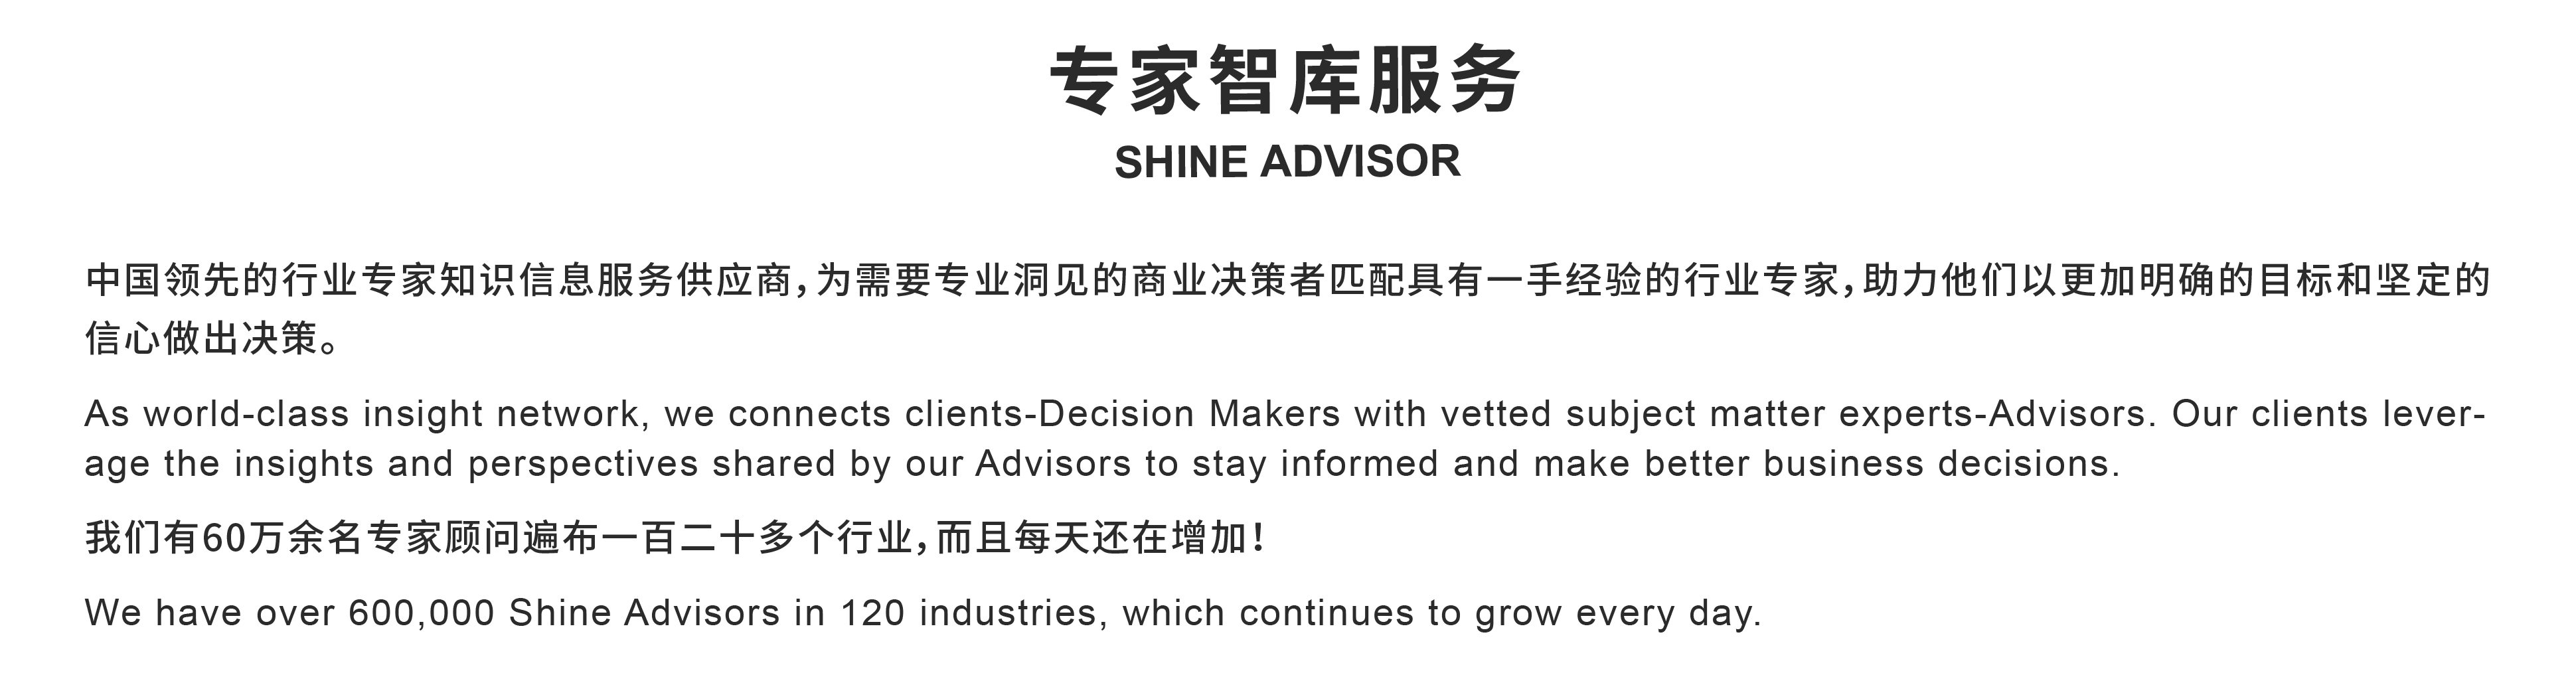 Shine Advisor